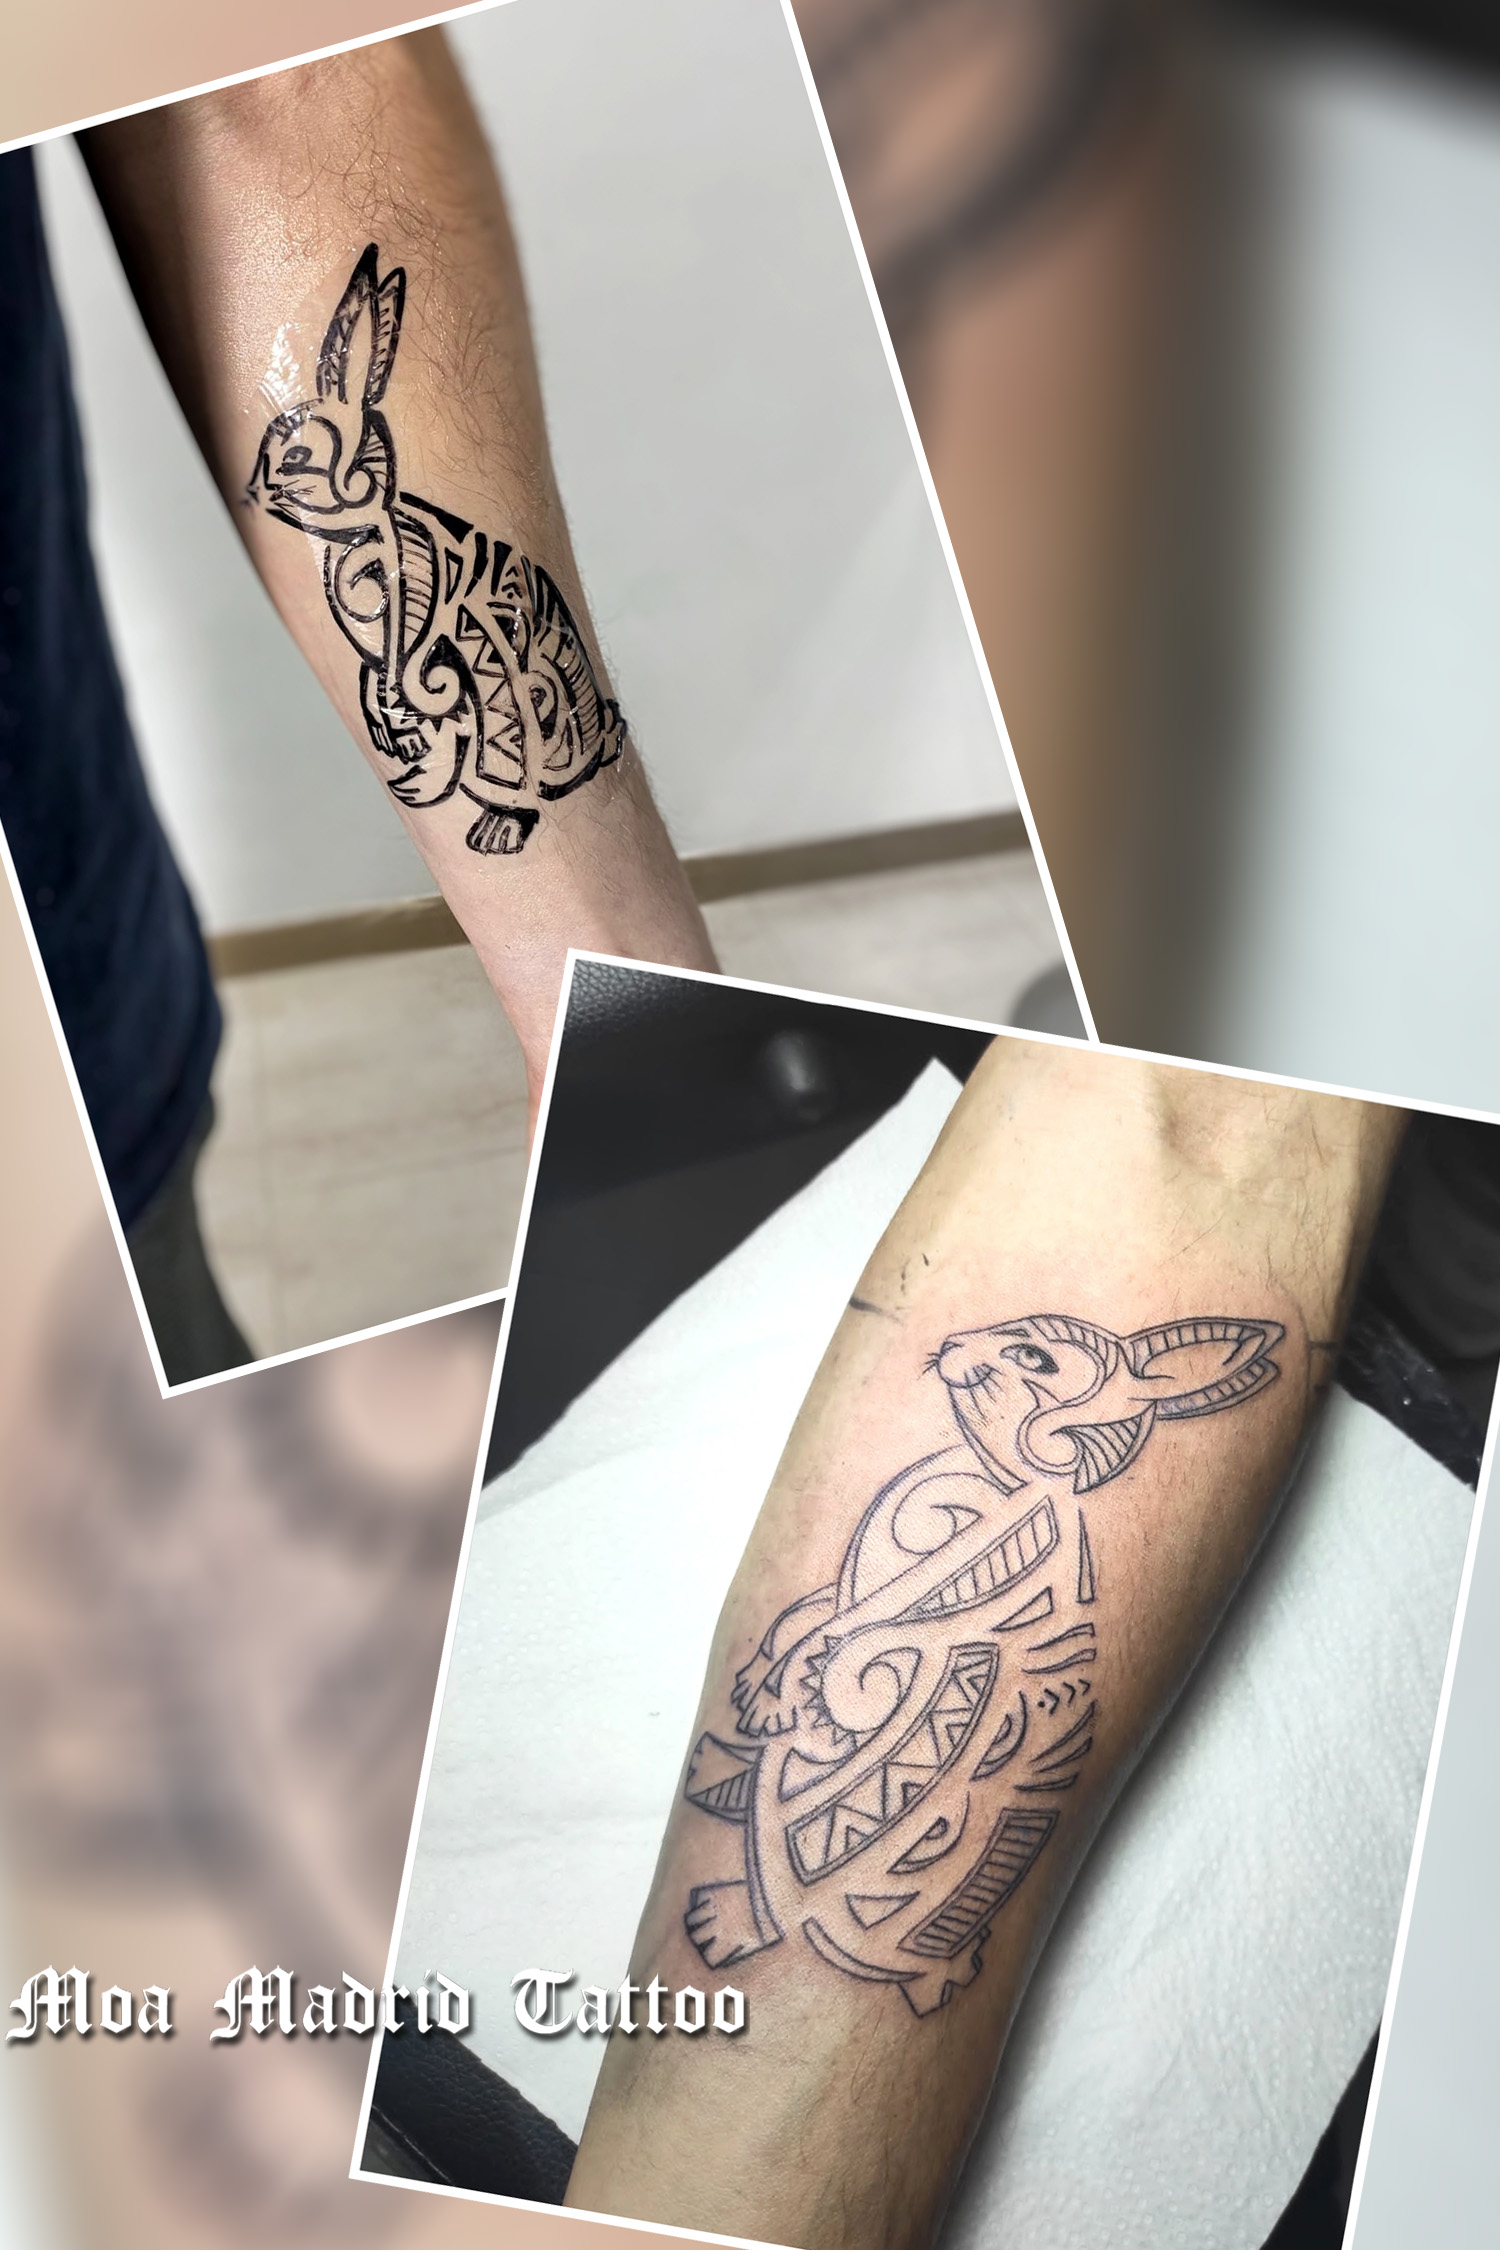 Elegido mejor diseño de tatuaje en Madrid